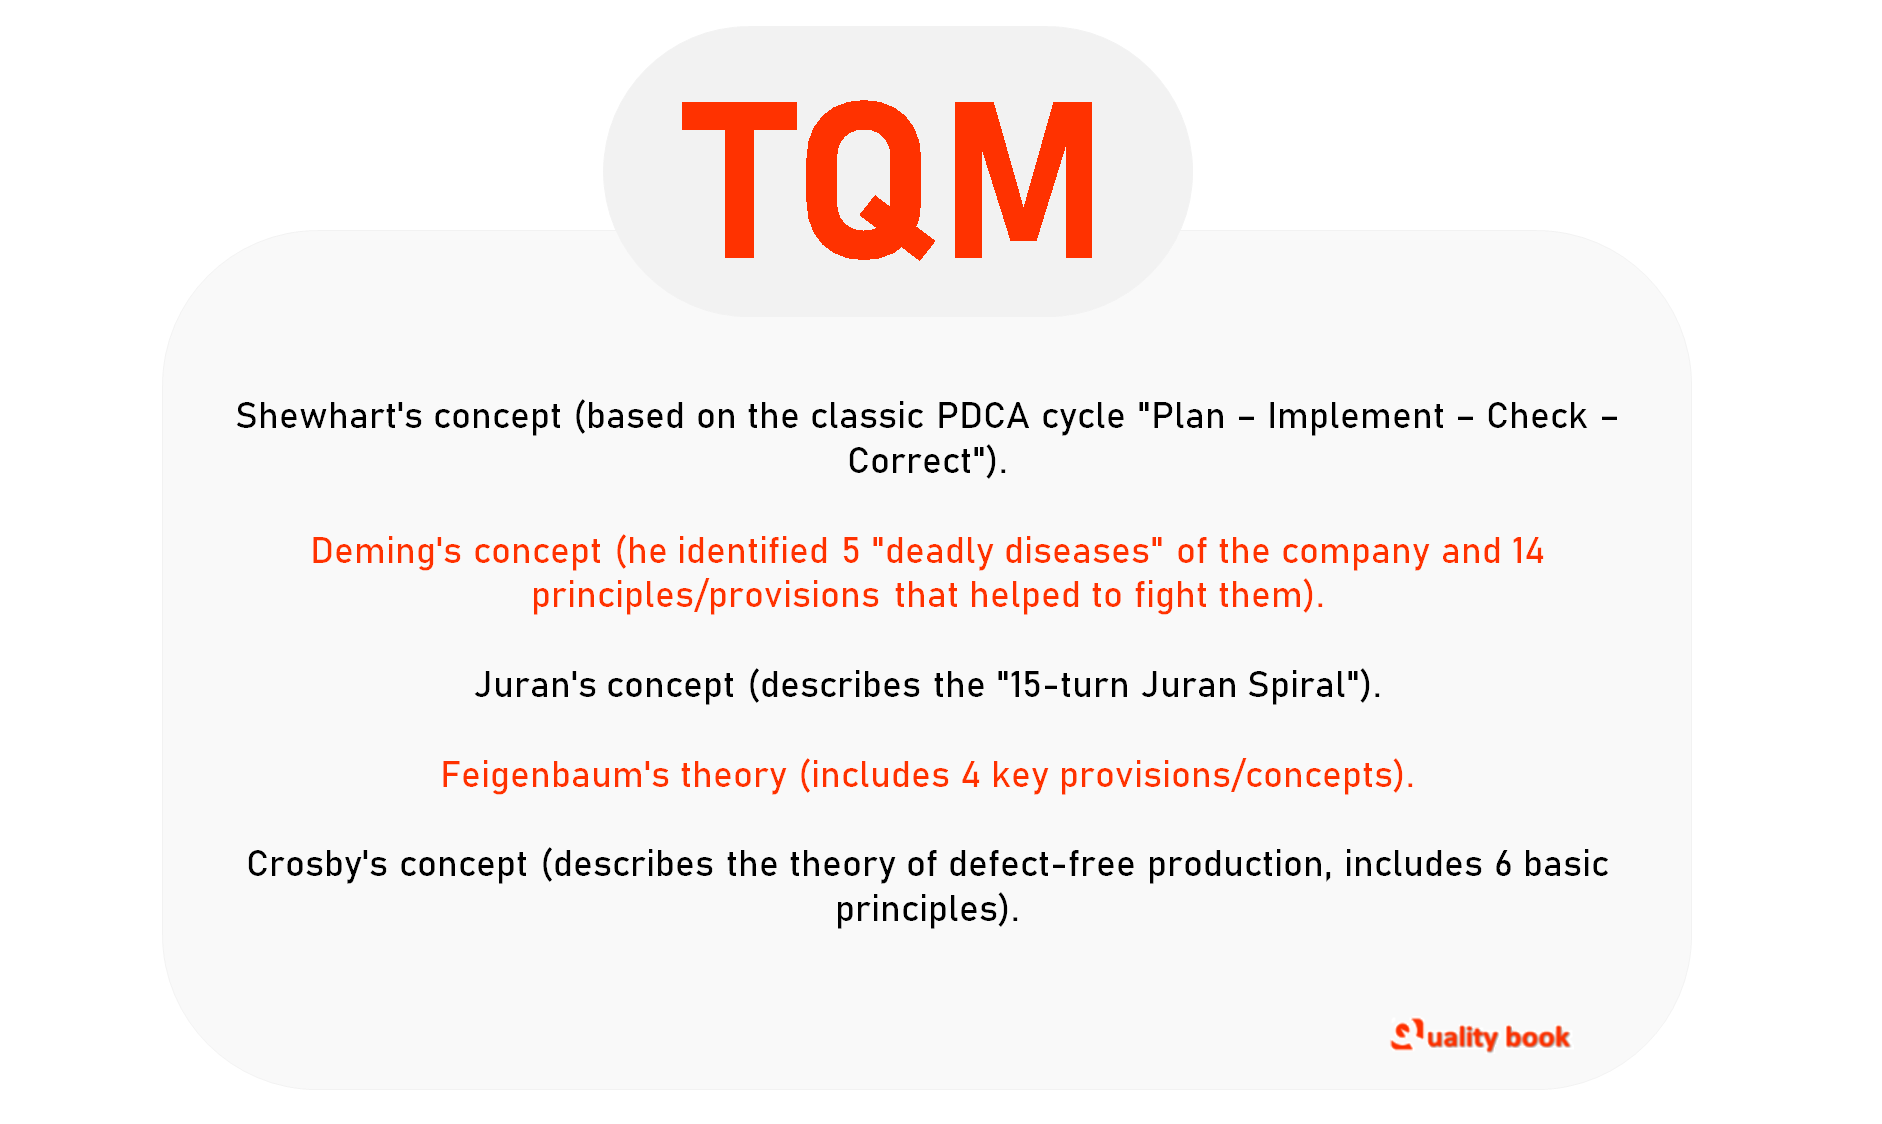 Implementation of TQM